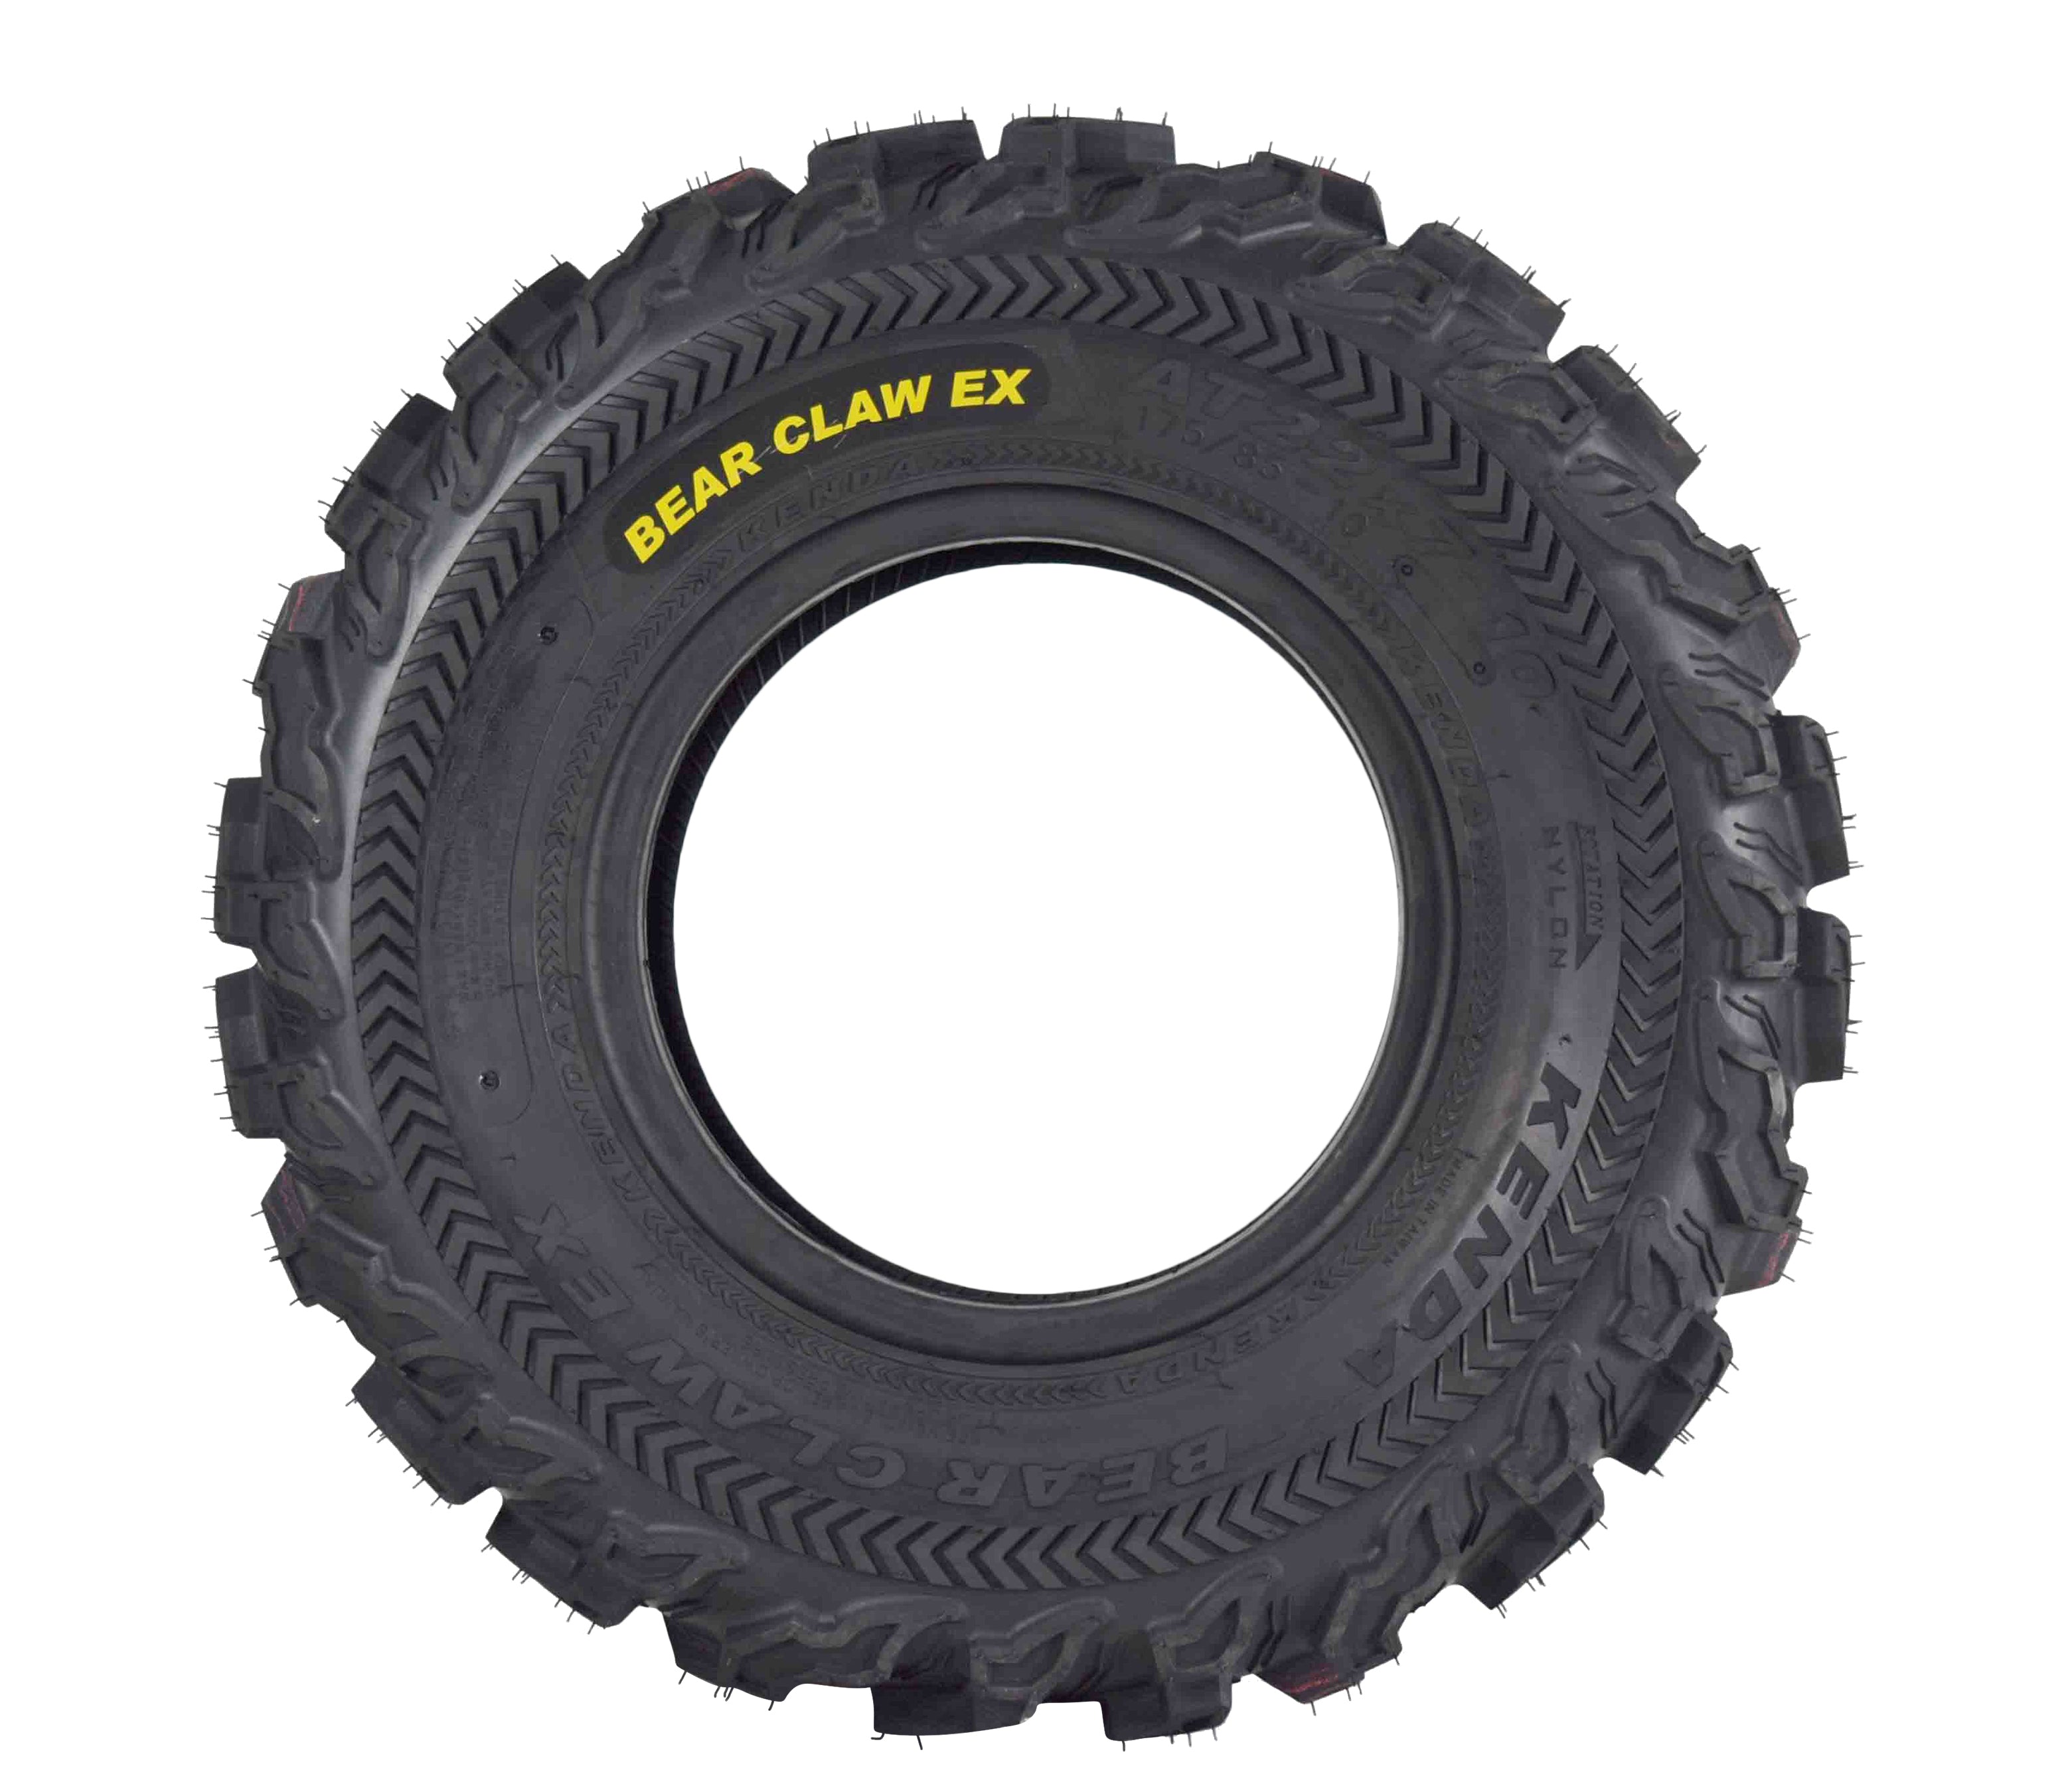 Kenda Bear Claw EX 22x7-10 F 22x11-10 R ATV 6 PLY Tires Bearclaw (4 Pack)